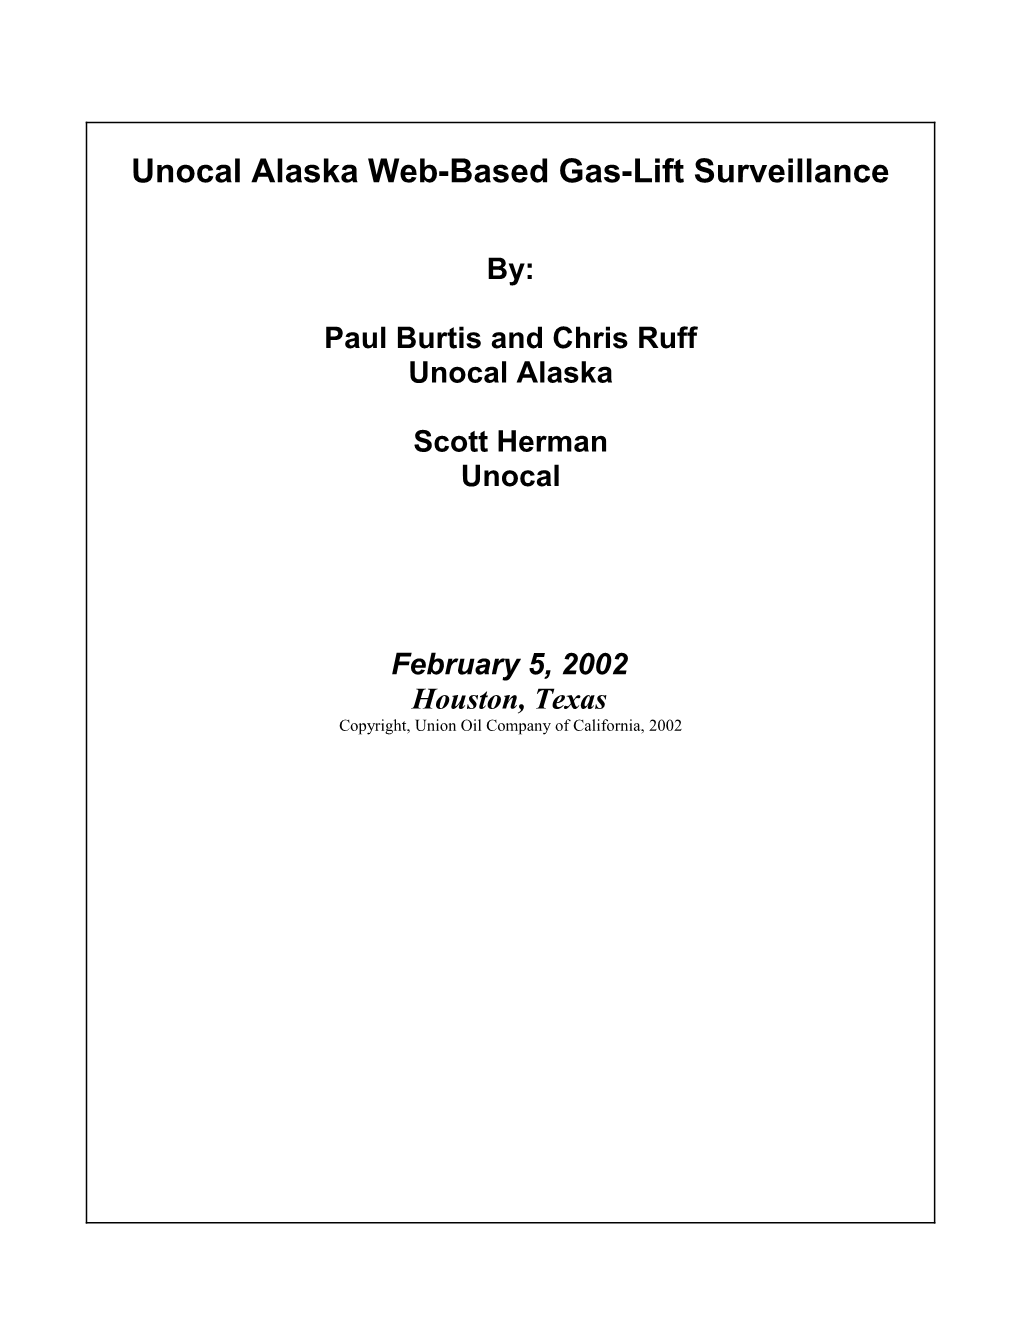 Unocal Alaska Web-Based, Gas-Lift Surveillance